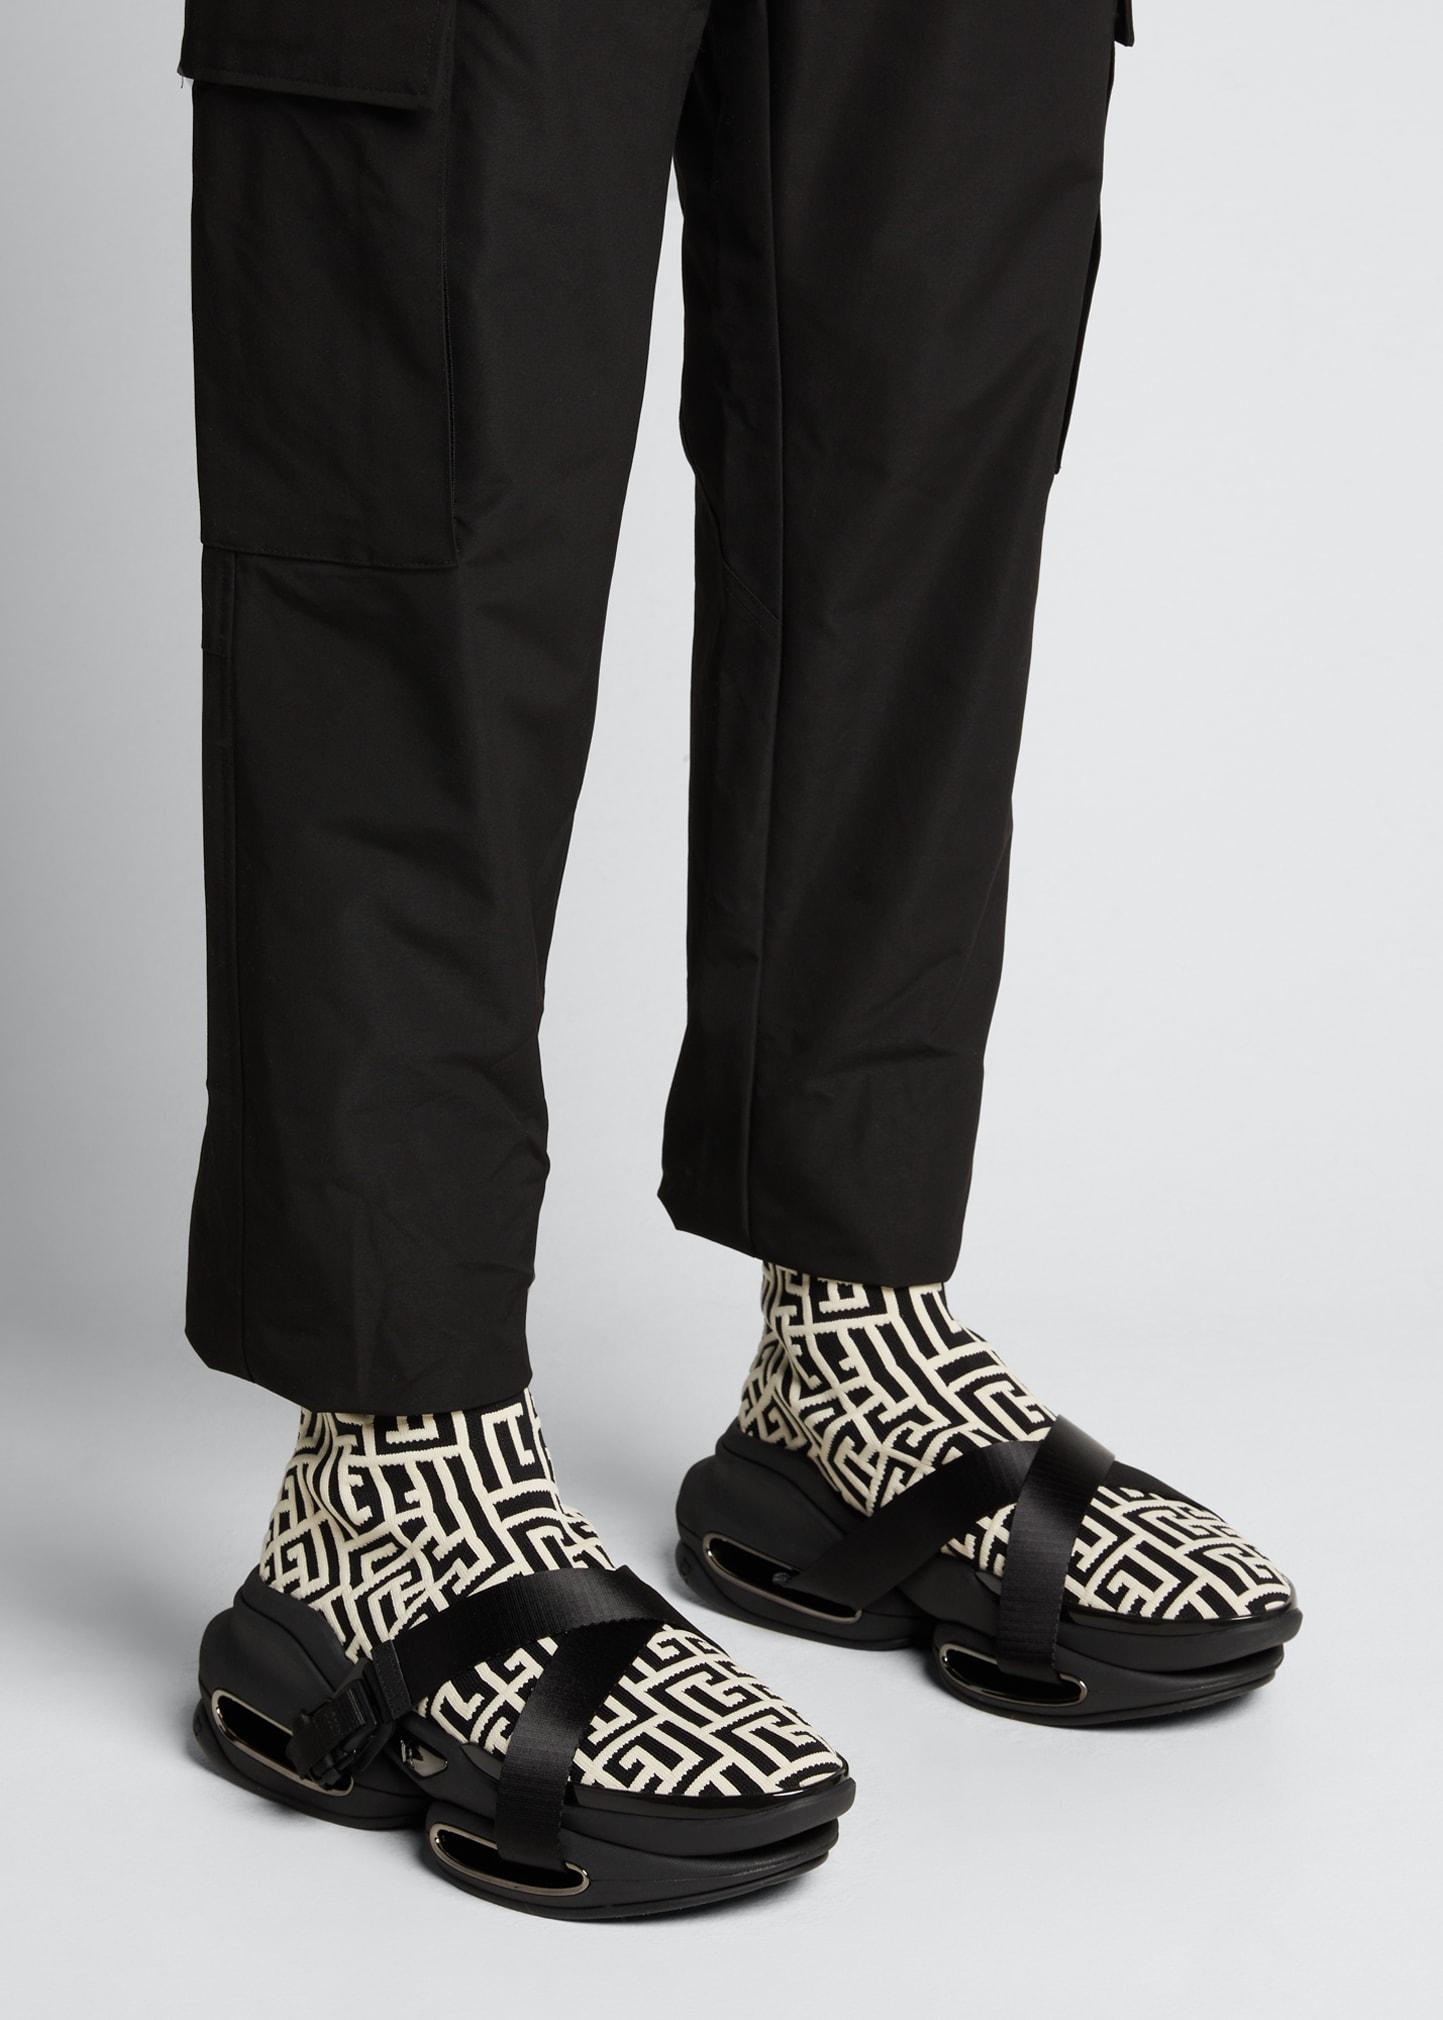 Balmain B Bold Monogram Knit Sock High-top Sneakers in Black for Men | Lyst